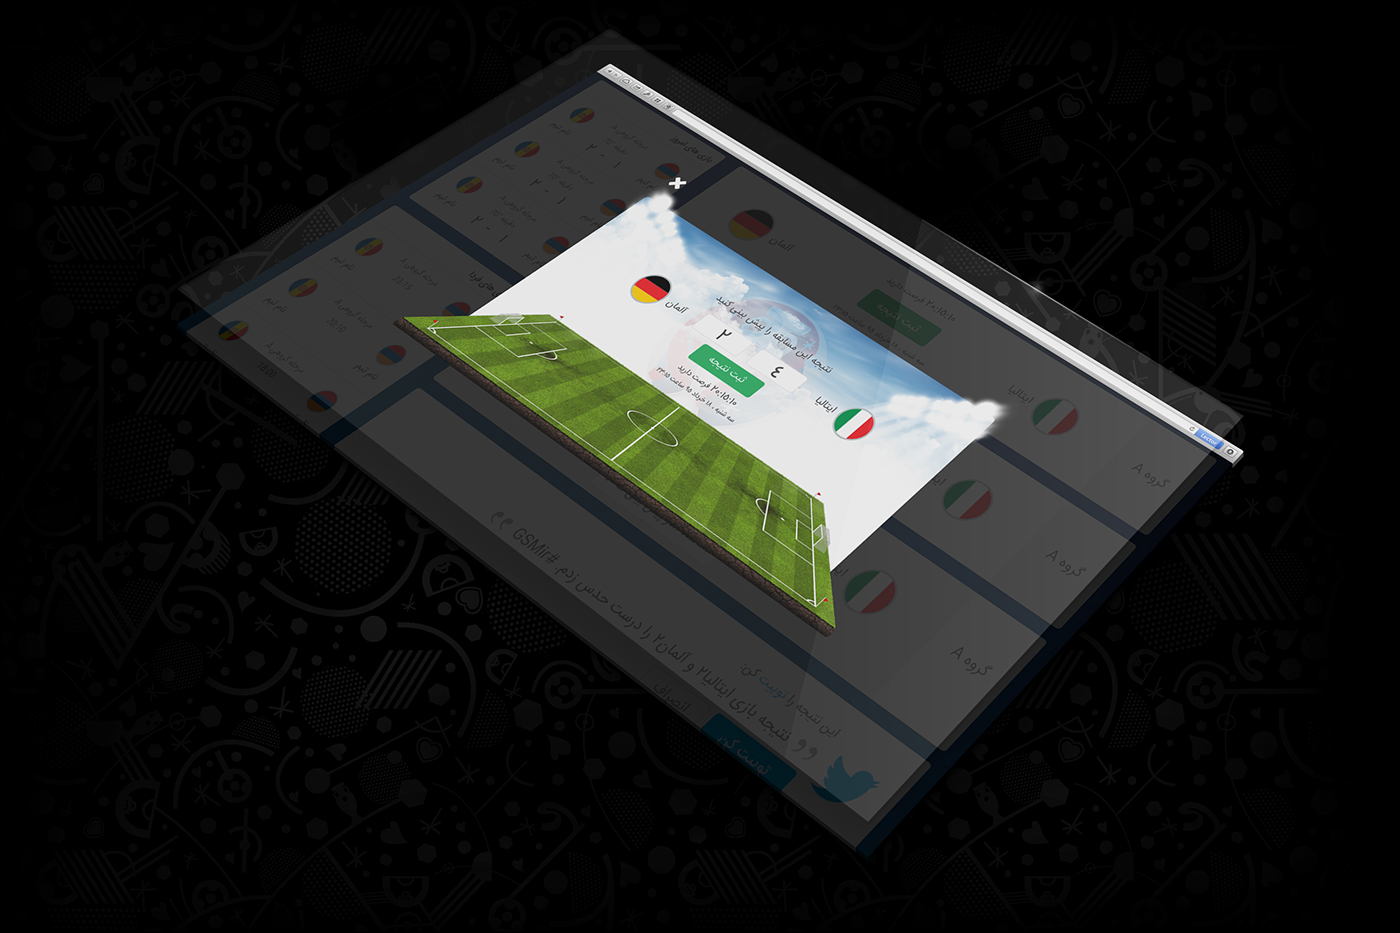 euro Euro2016 prediction gsm.ir Iran persian ui design user interface Web Website